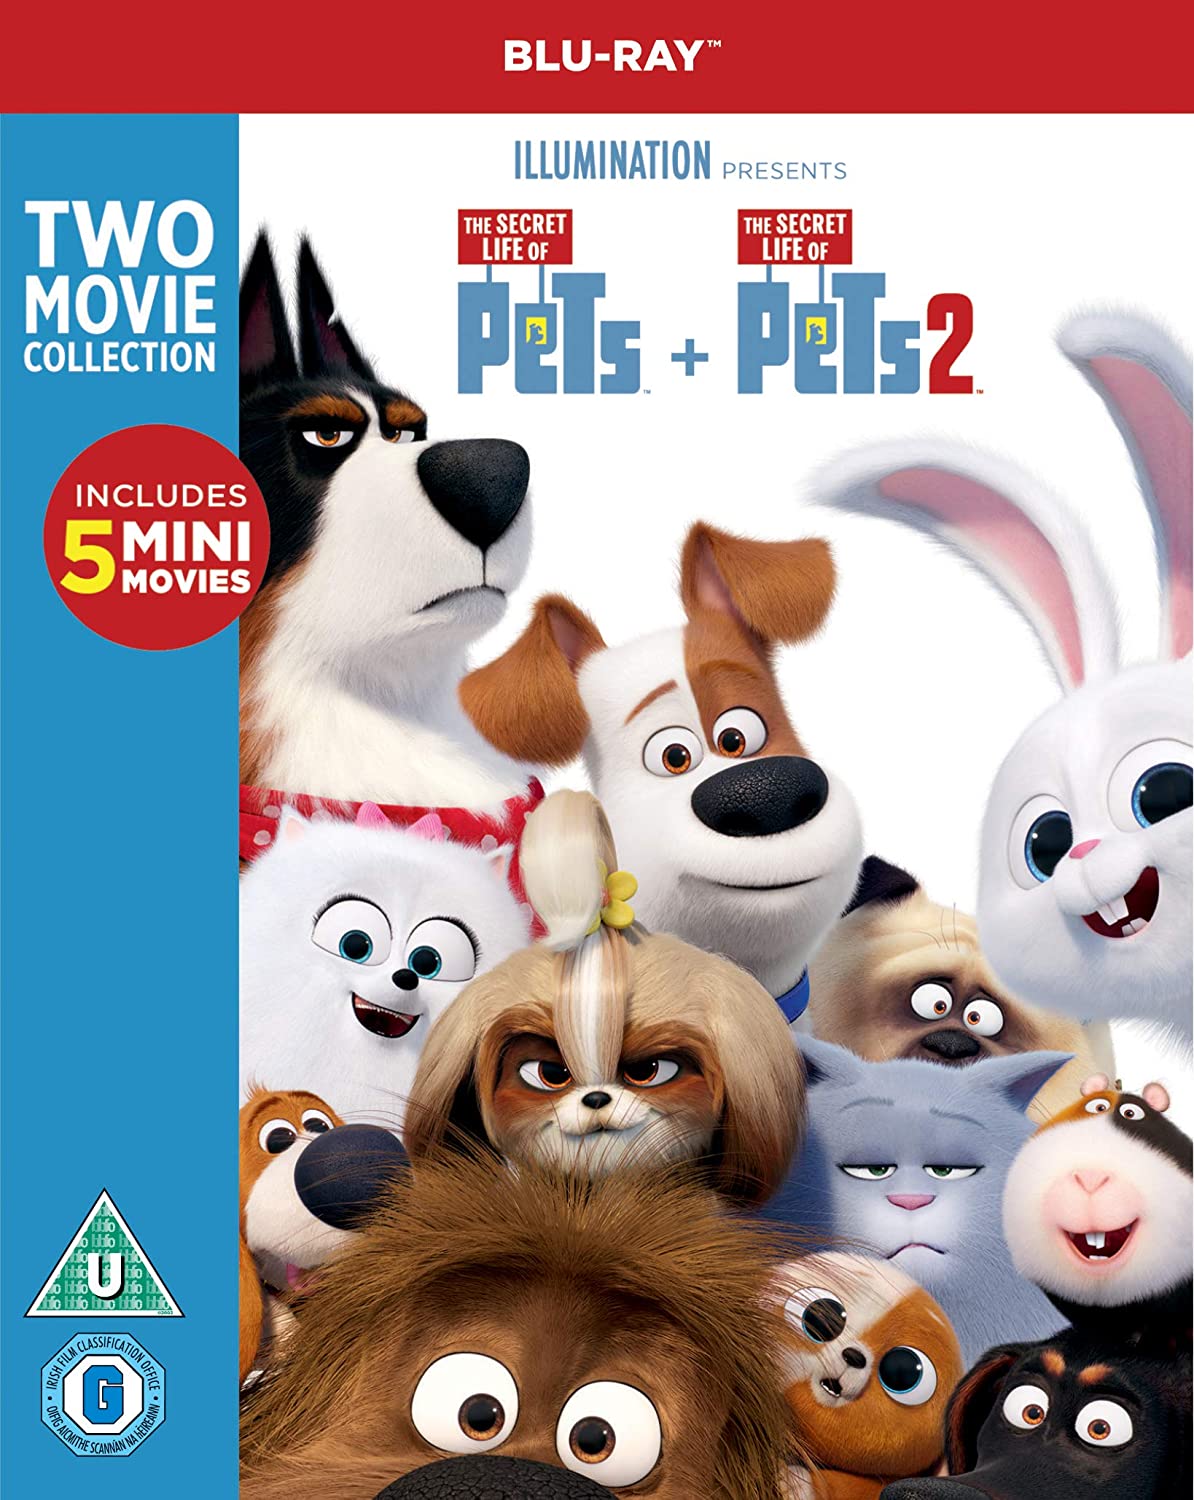 The Secret Life Of Pets 2 Film Collection [2019] (Illumination) (Blu-ray)